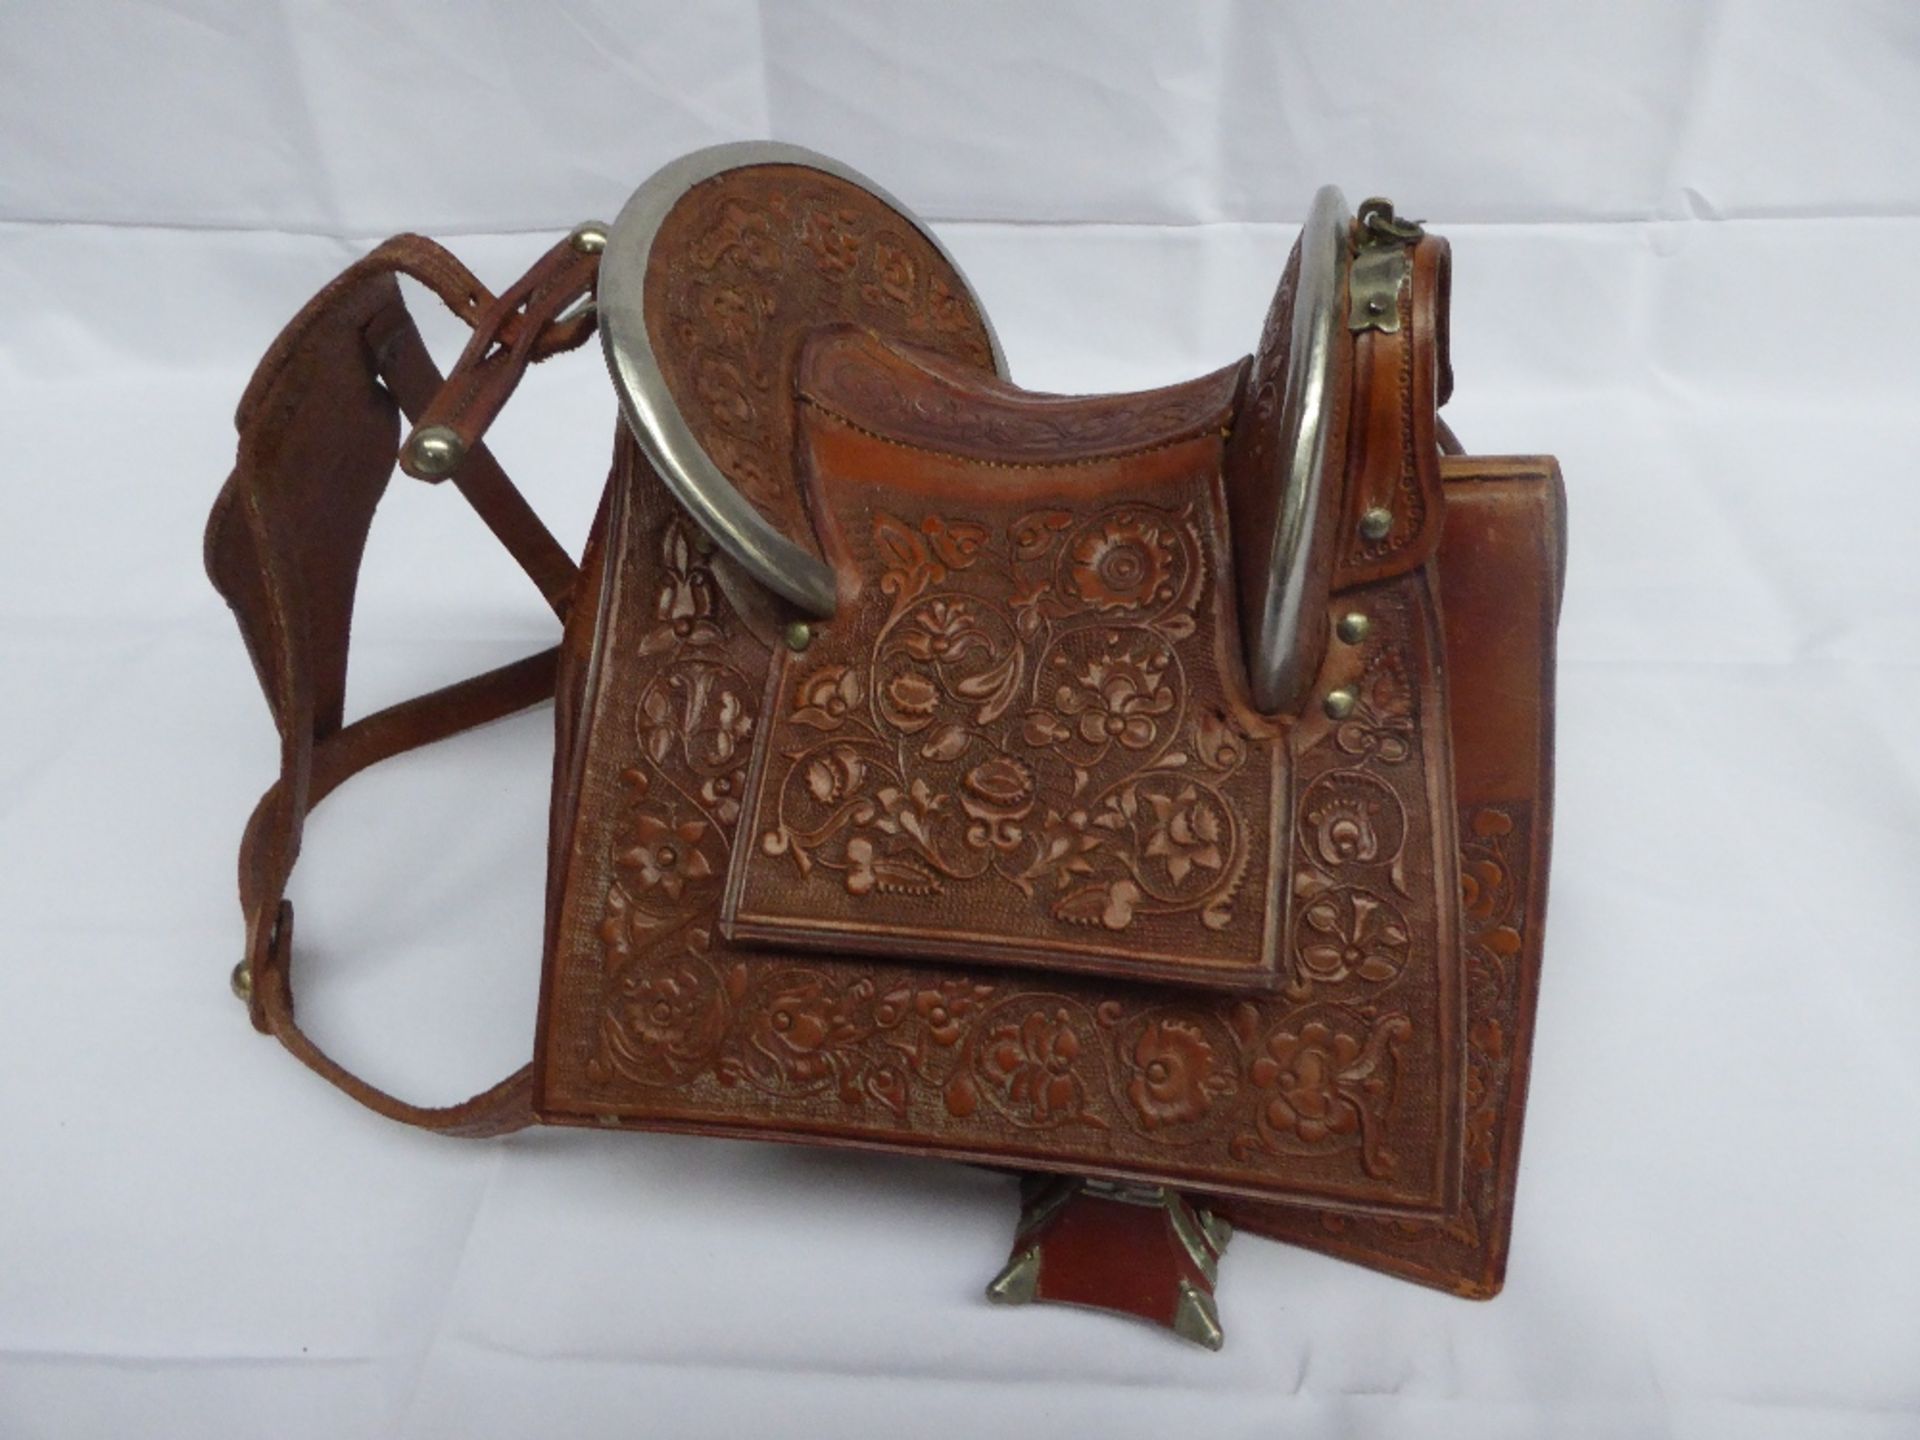 Miniature Spanish Conquistador saddle and a miniature Western saddle made in Peru - Image 2 of 12